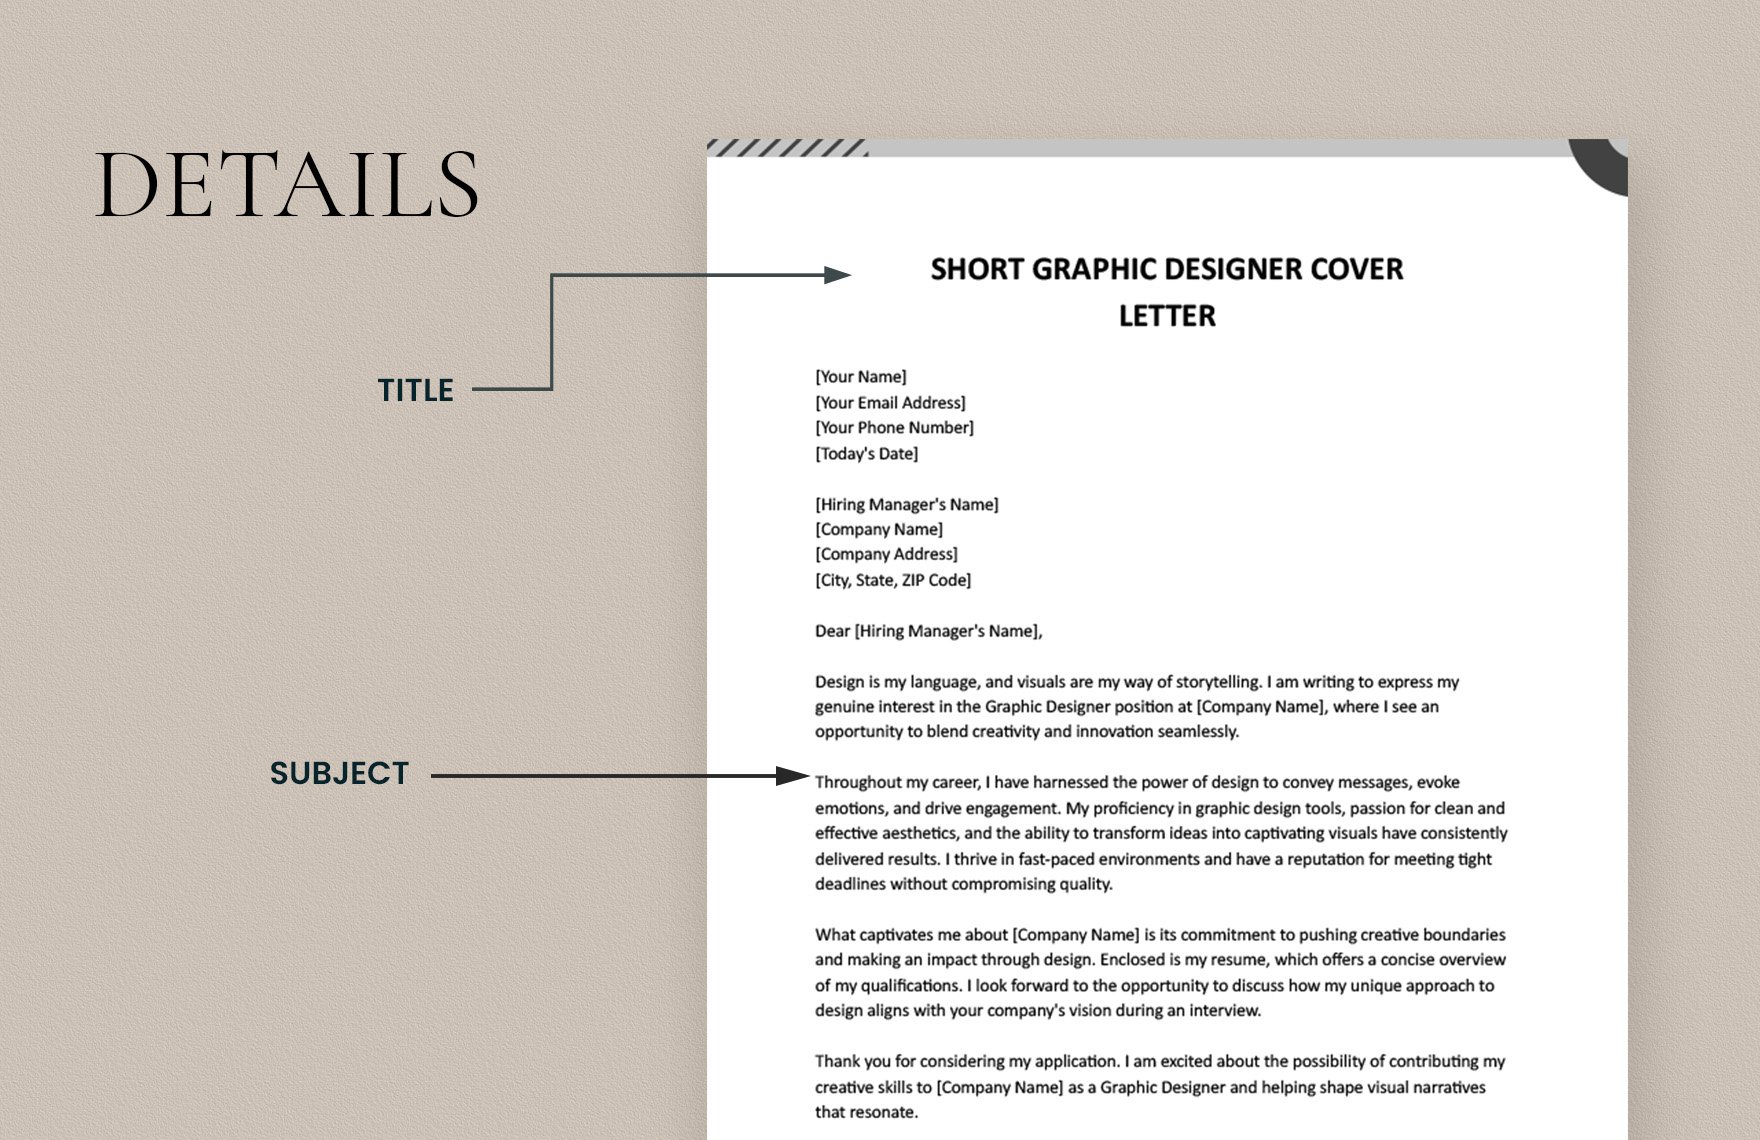 Short Graphic Designer Cover Letter Template